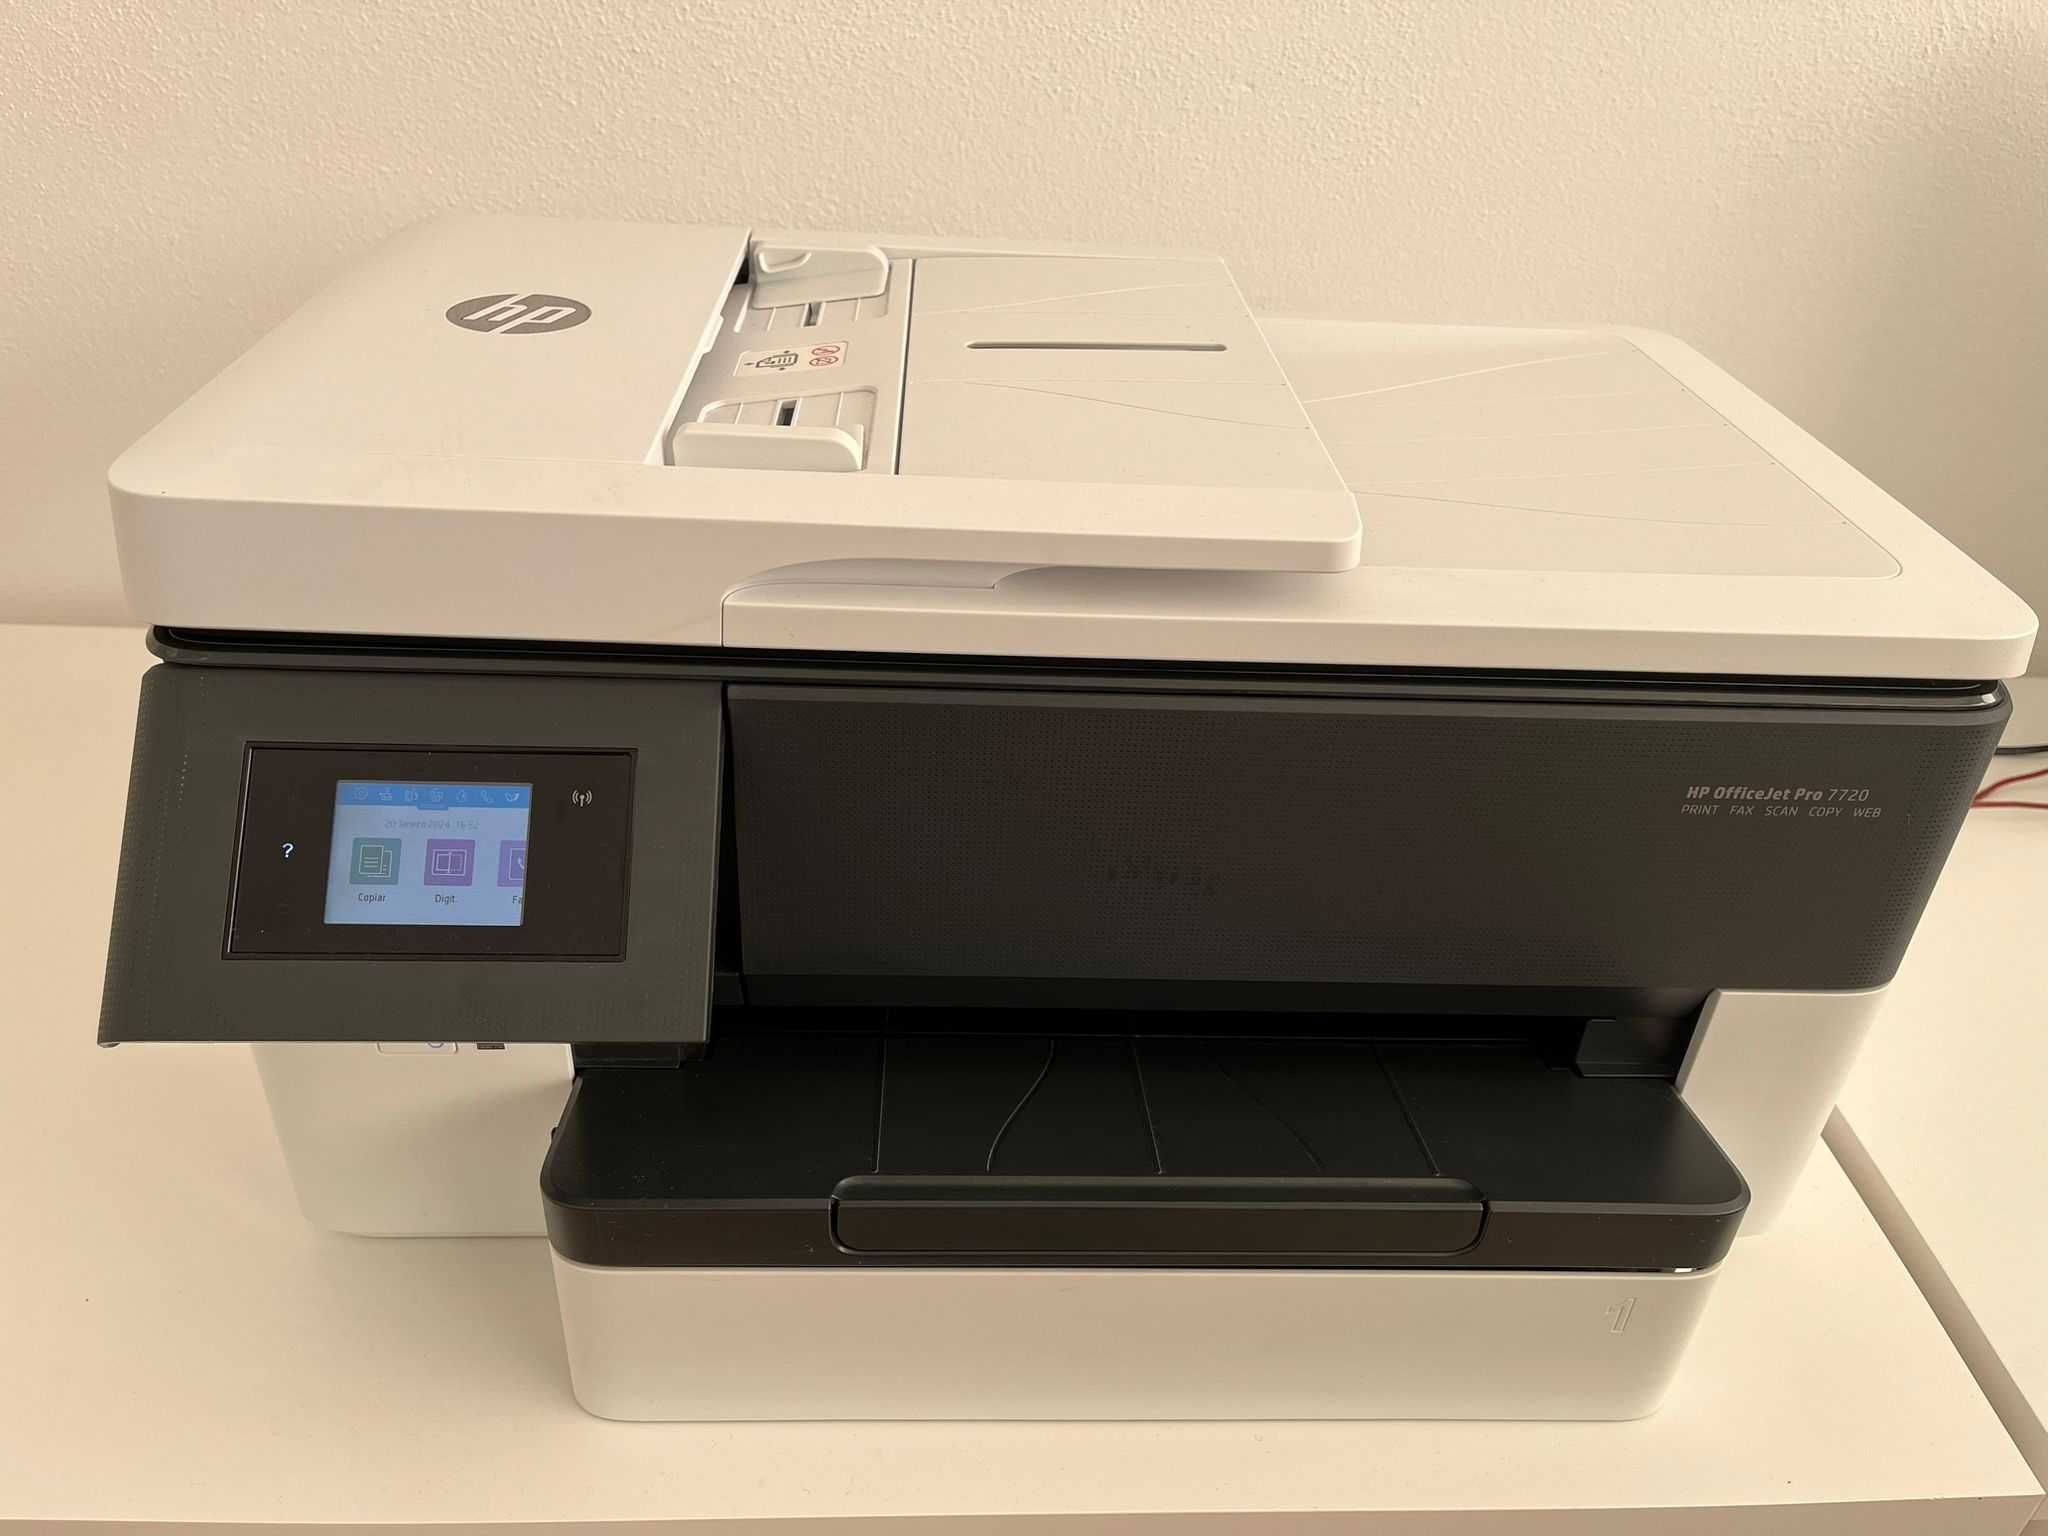 Oportunidade Impressora HP Officejet Pro 7720 A3 RJ11